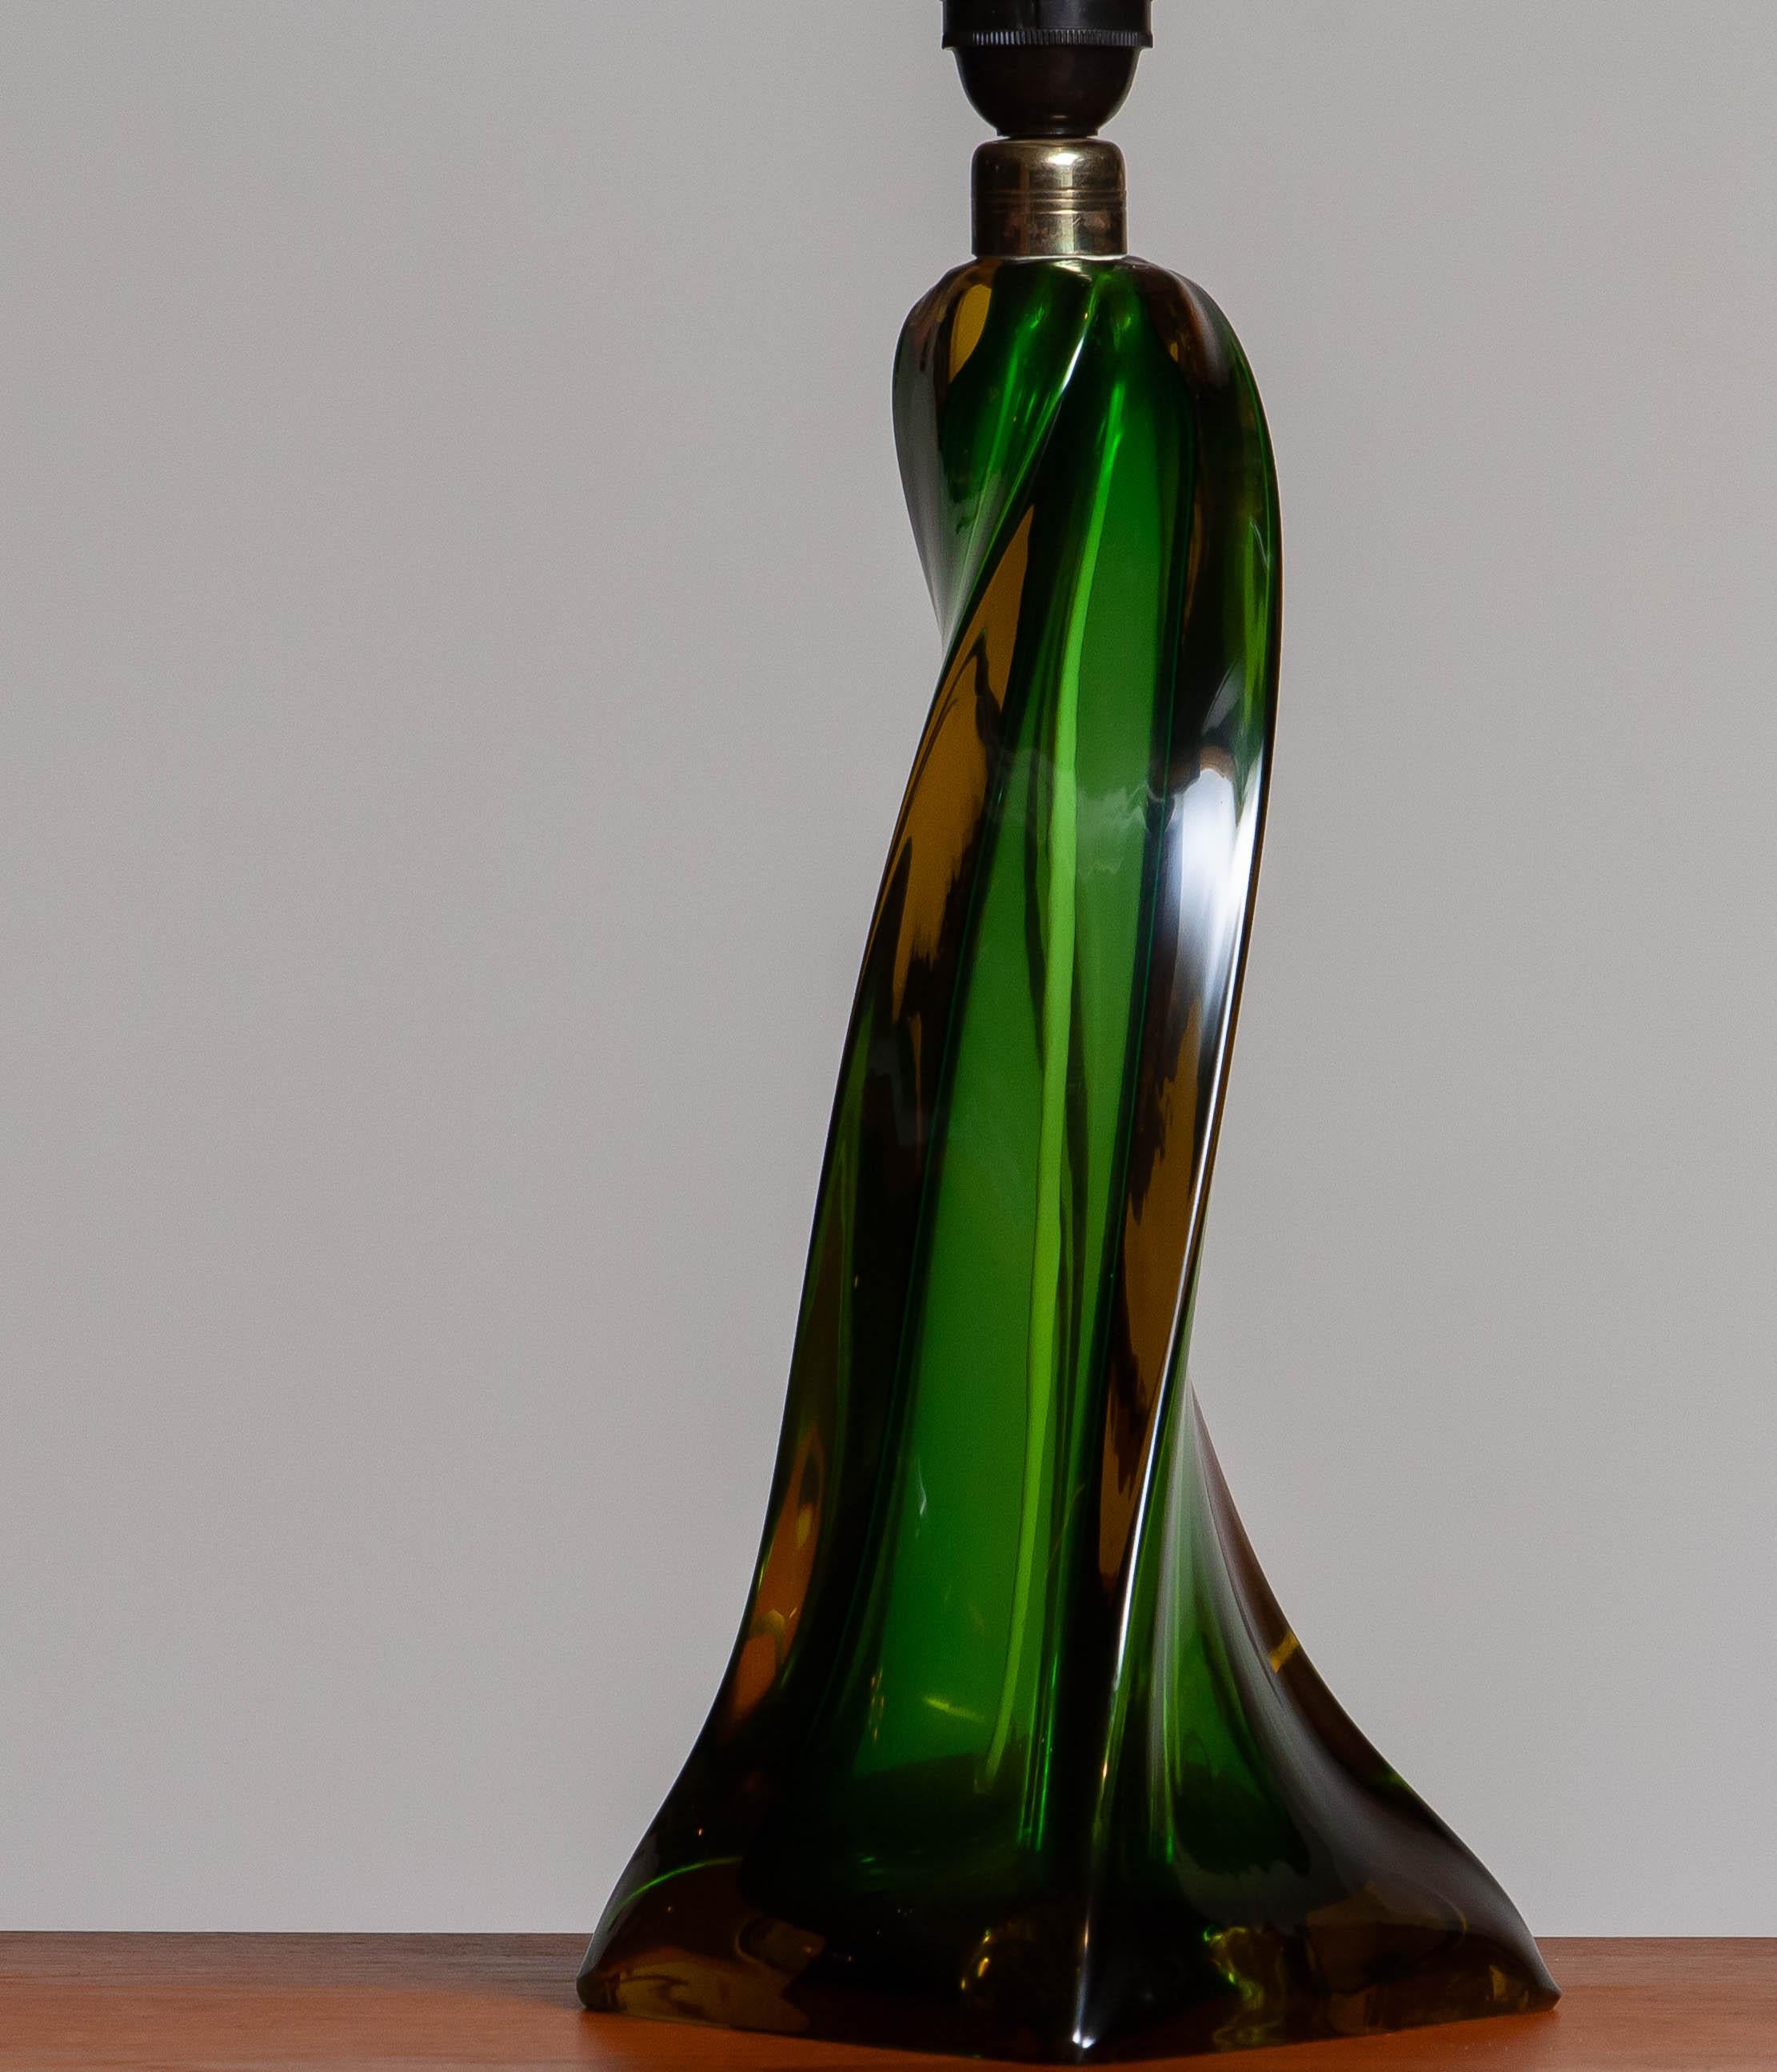 Metal 1940s Single Venetian Murano Organic Table Lamp in Amber and Green, Art Nouveau